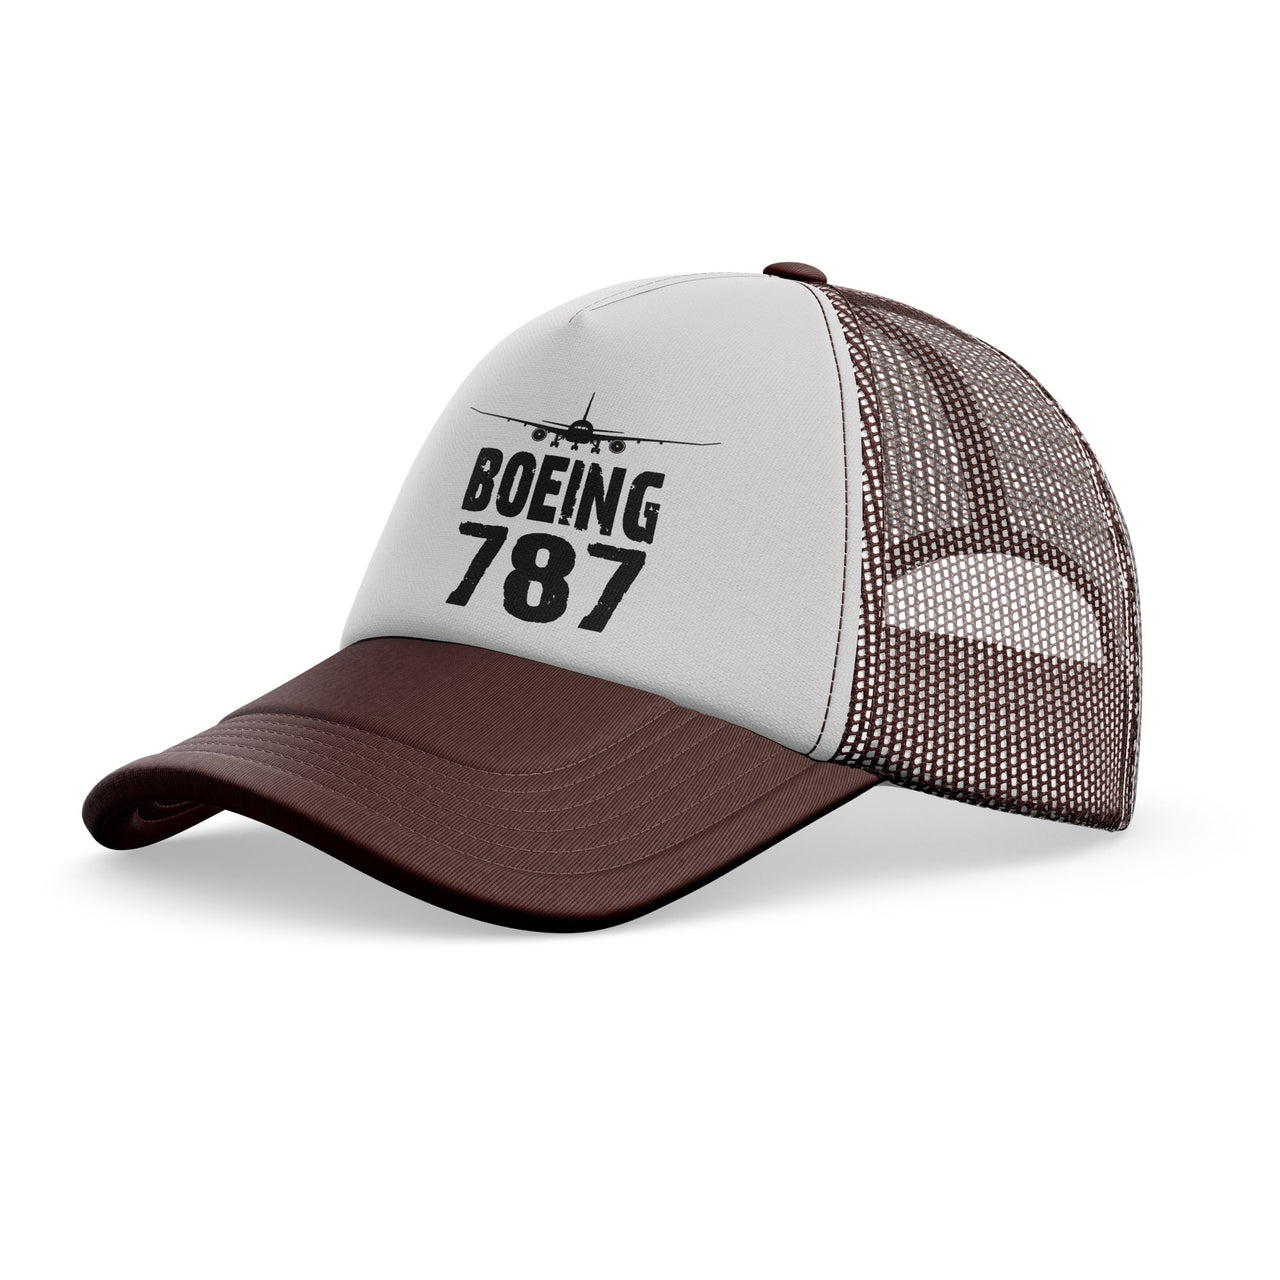 Boeing 787 & Plane Designed Trucker Caps & Hats